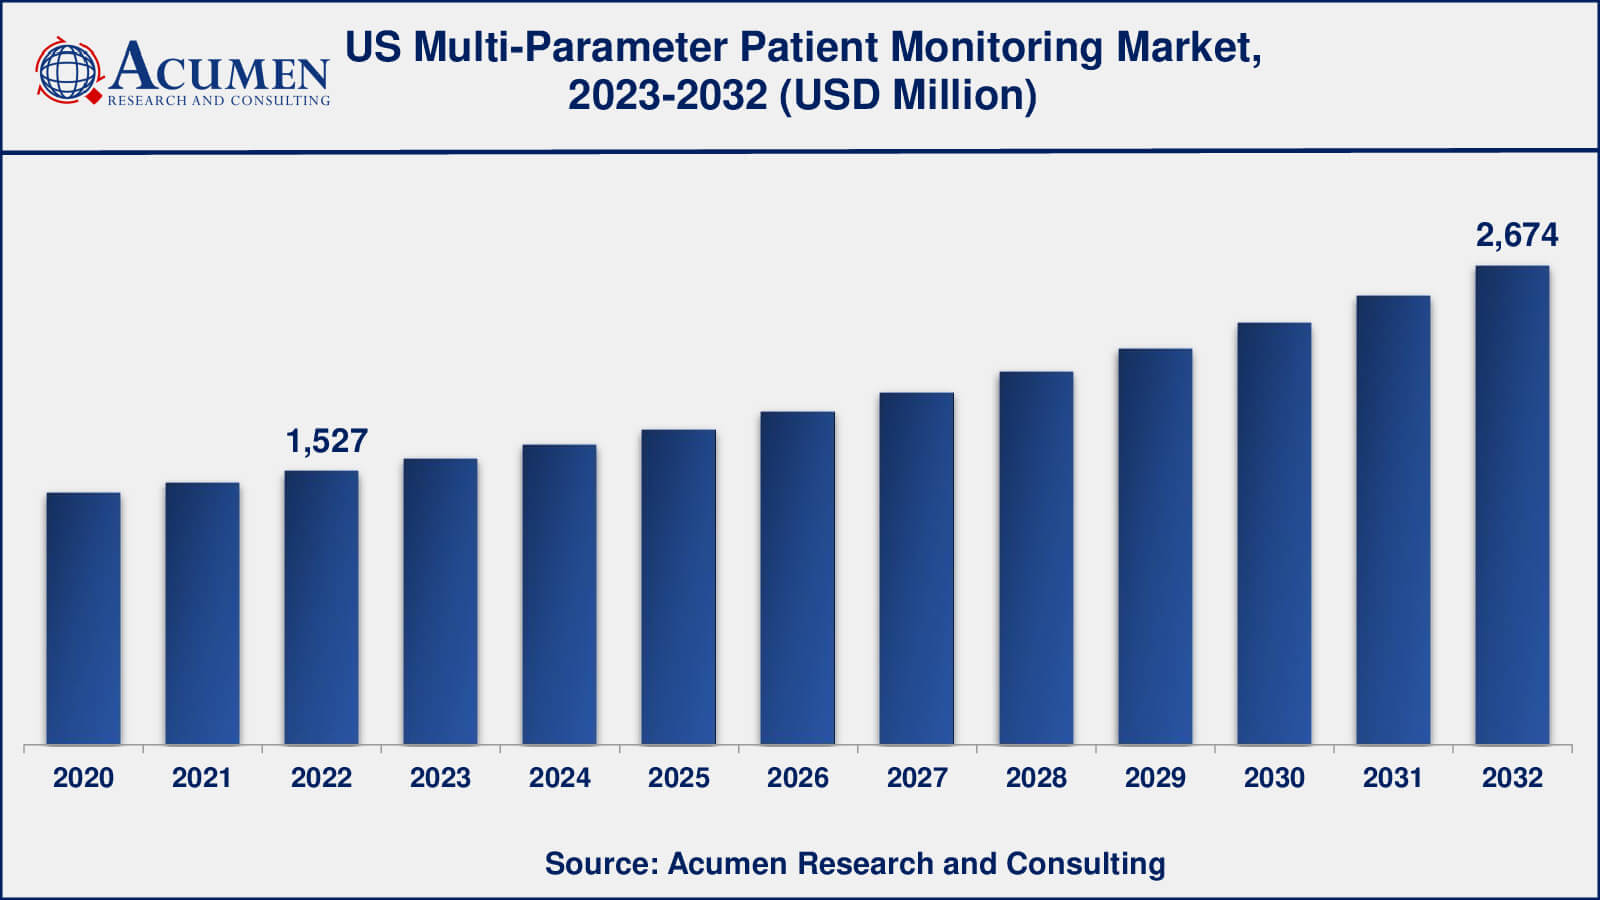 US Multi-Parameter Patient Monitoring Market Drivers